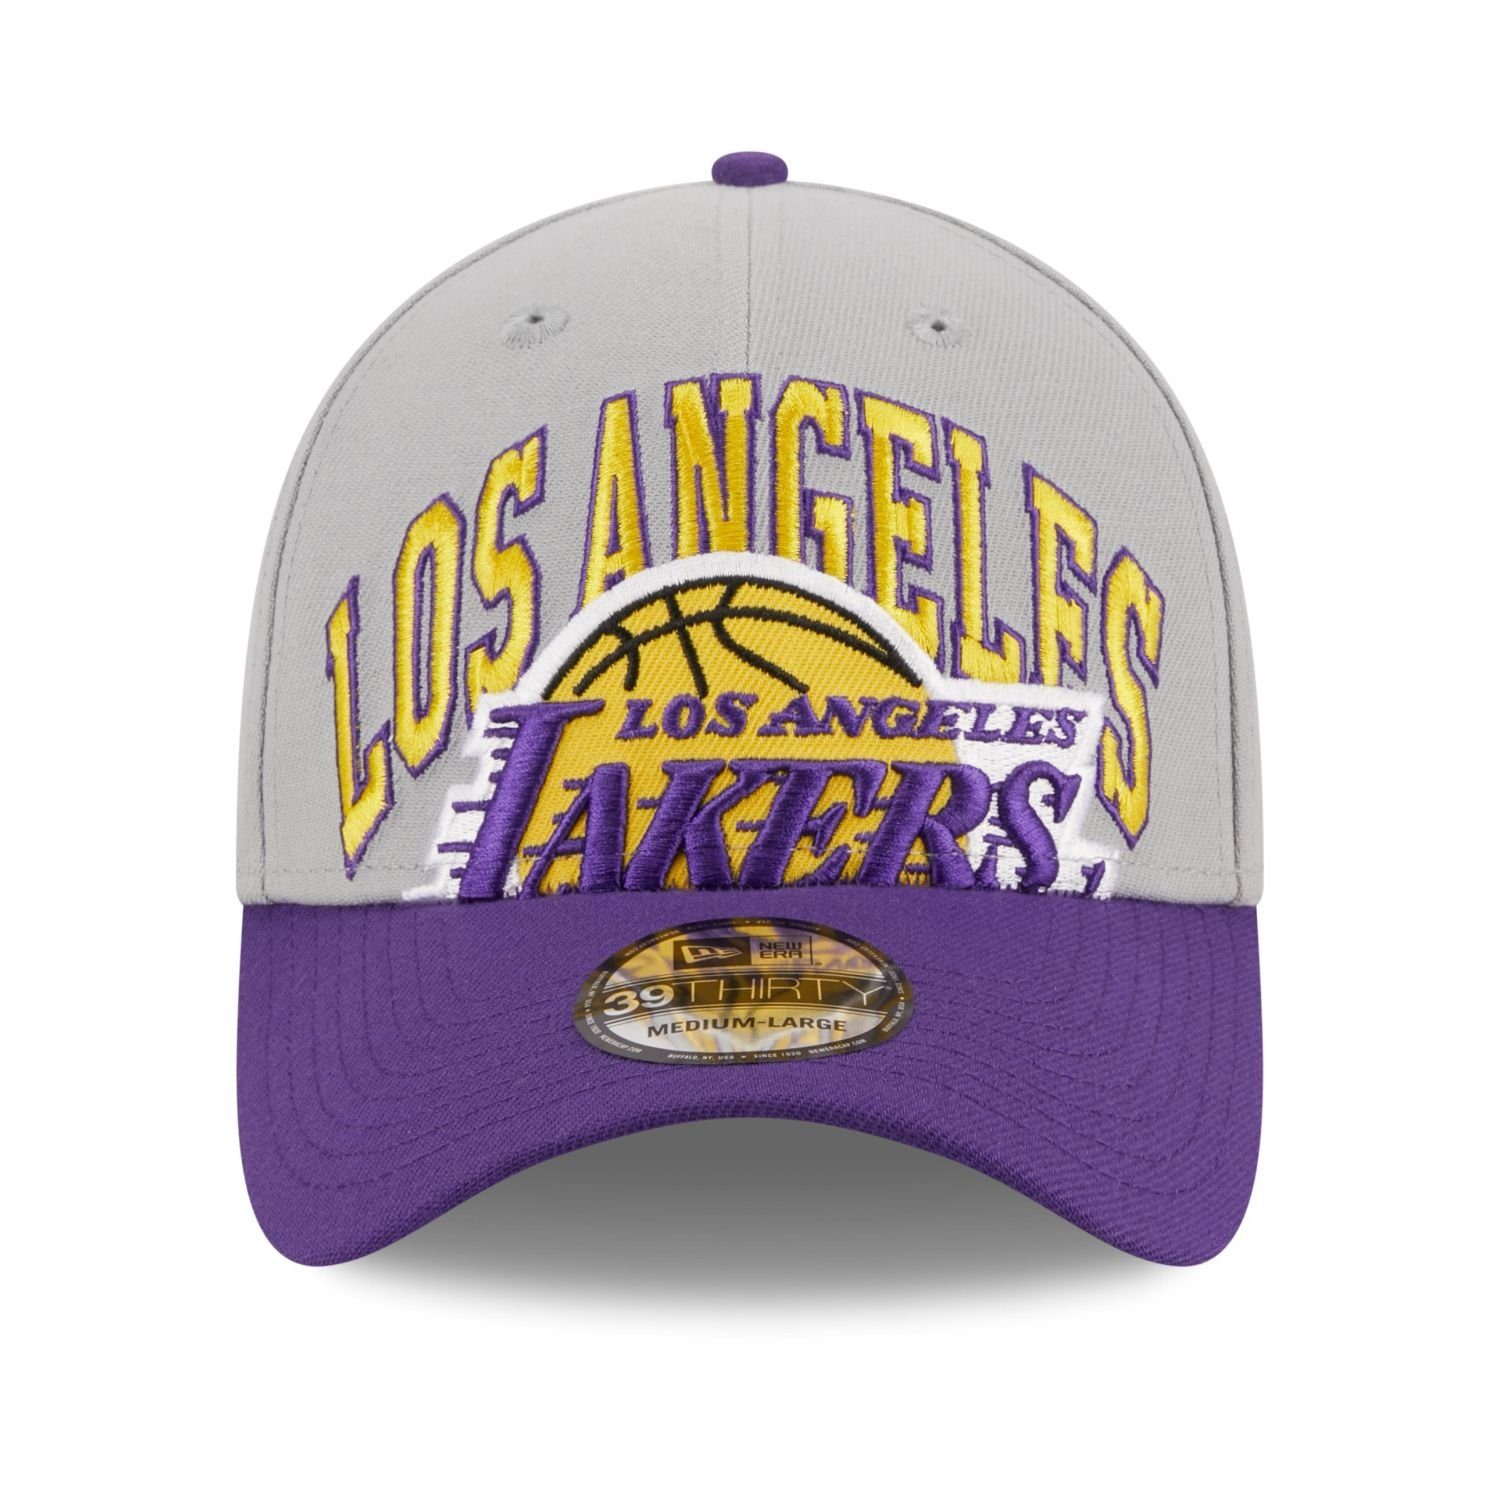 OFF TIP Flex Angeles NBA Los Cap Era 39Thirty New Lakers